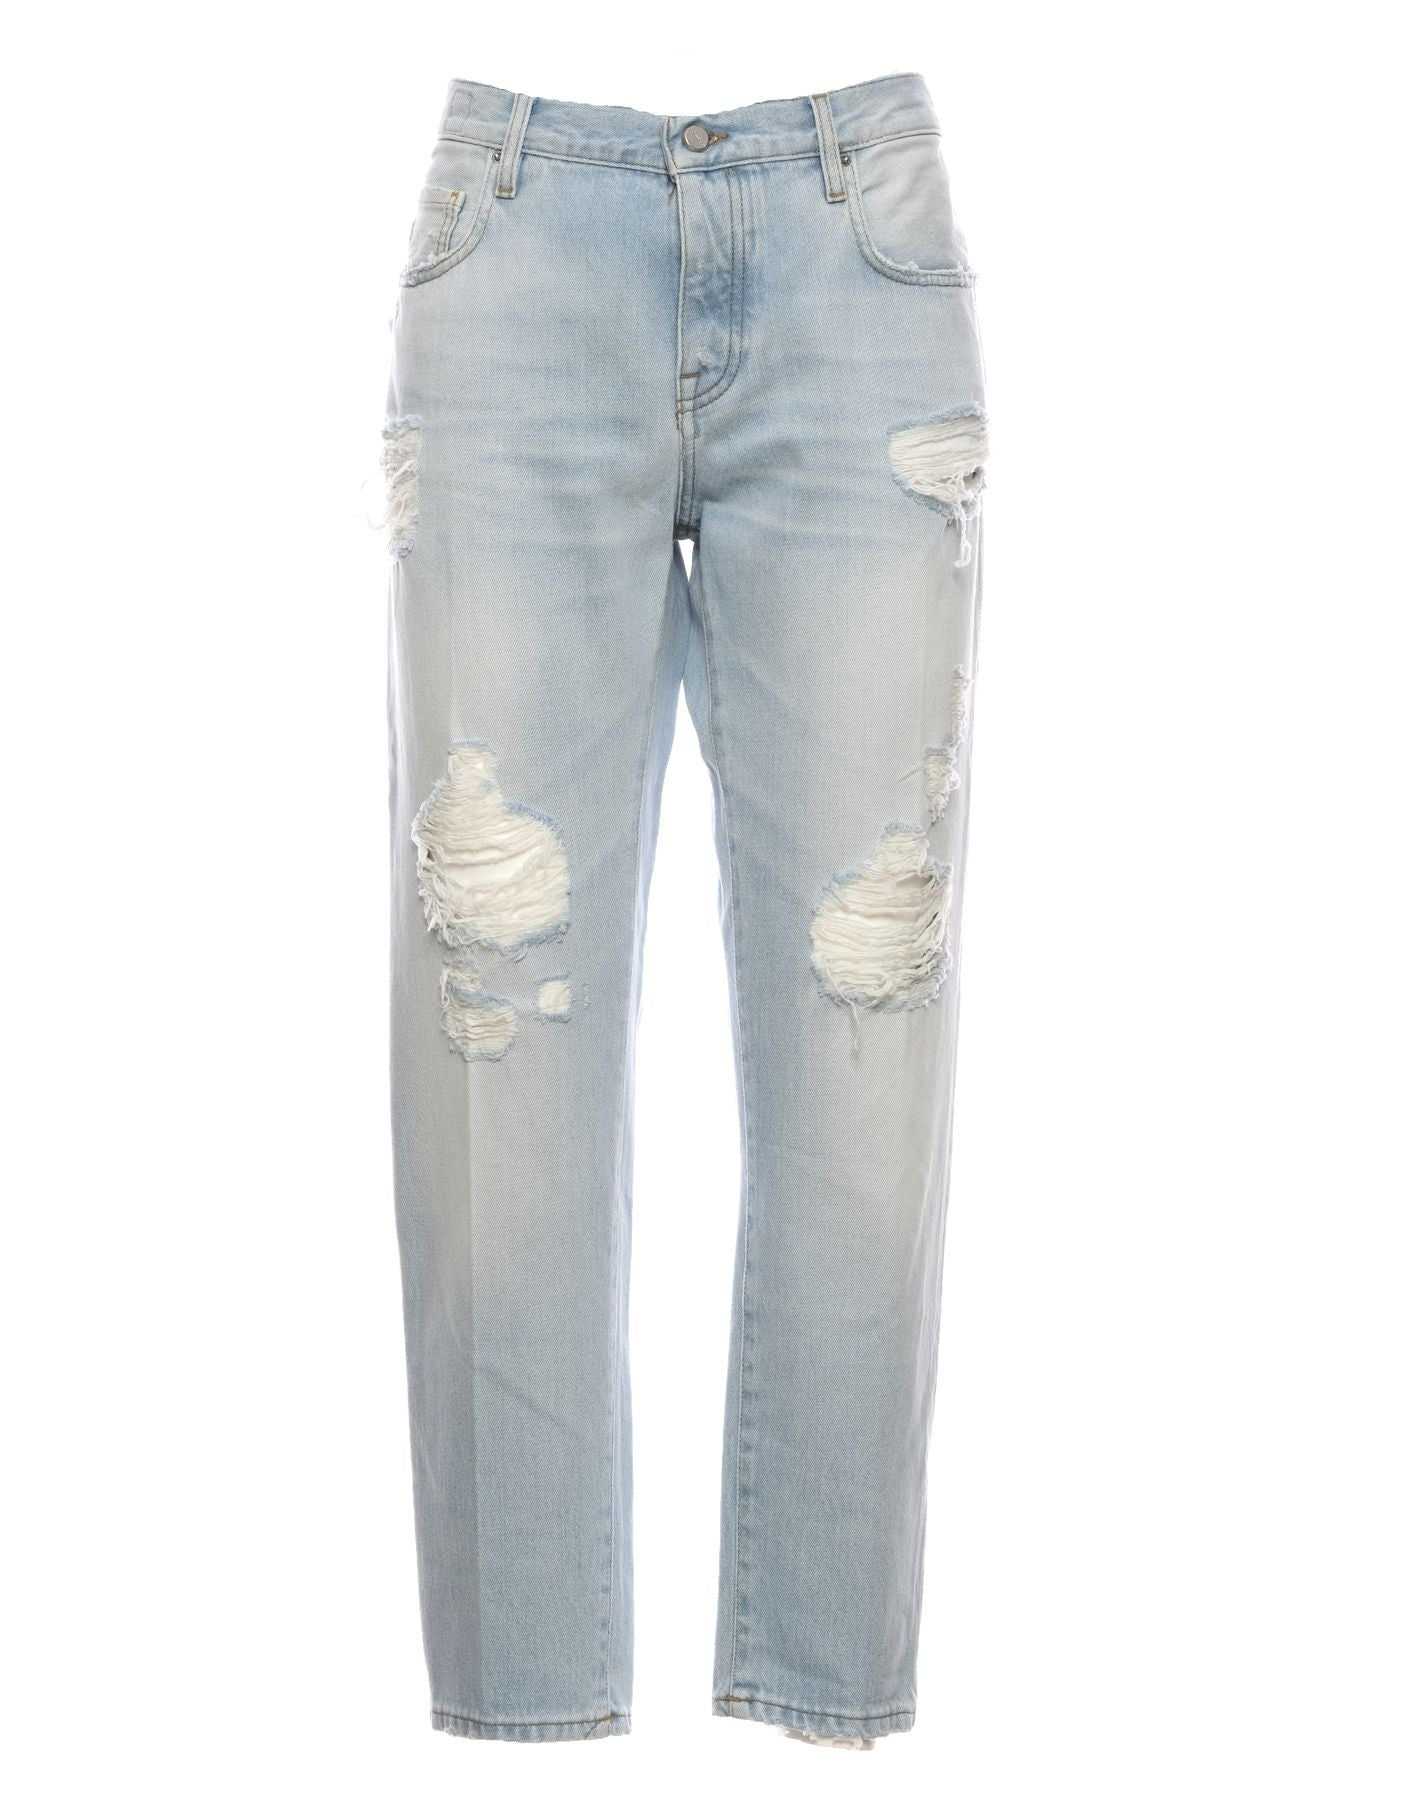 Jeans für Frauen DON THR FULLER MARIKA SS242